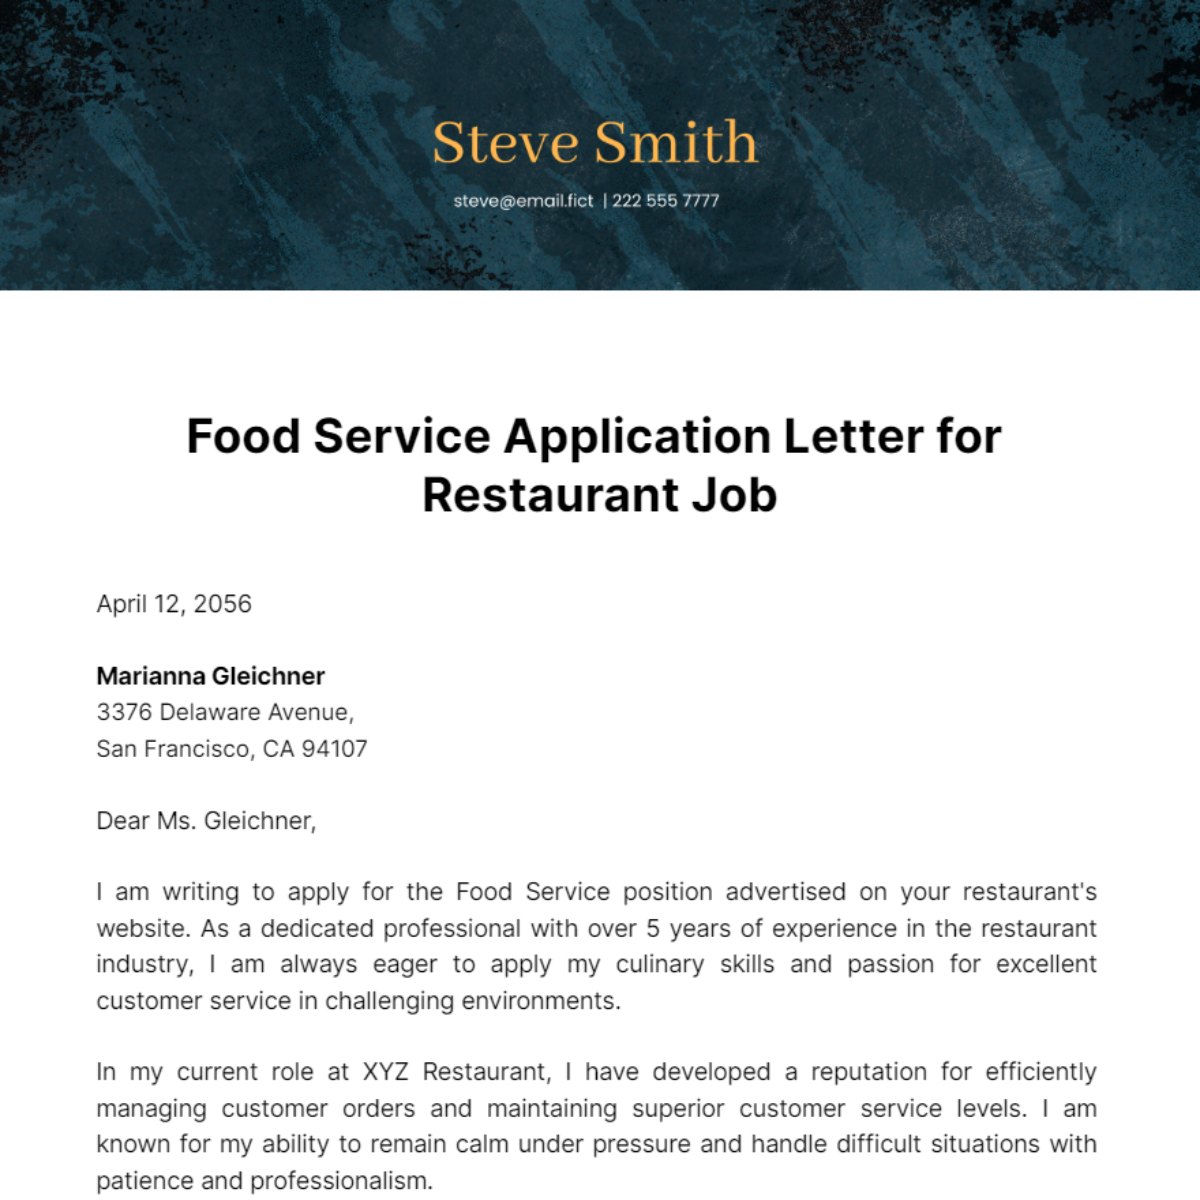 Food Service Application Letter for Restaurant Job Template